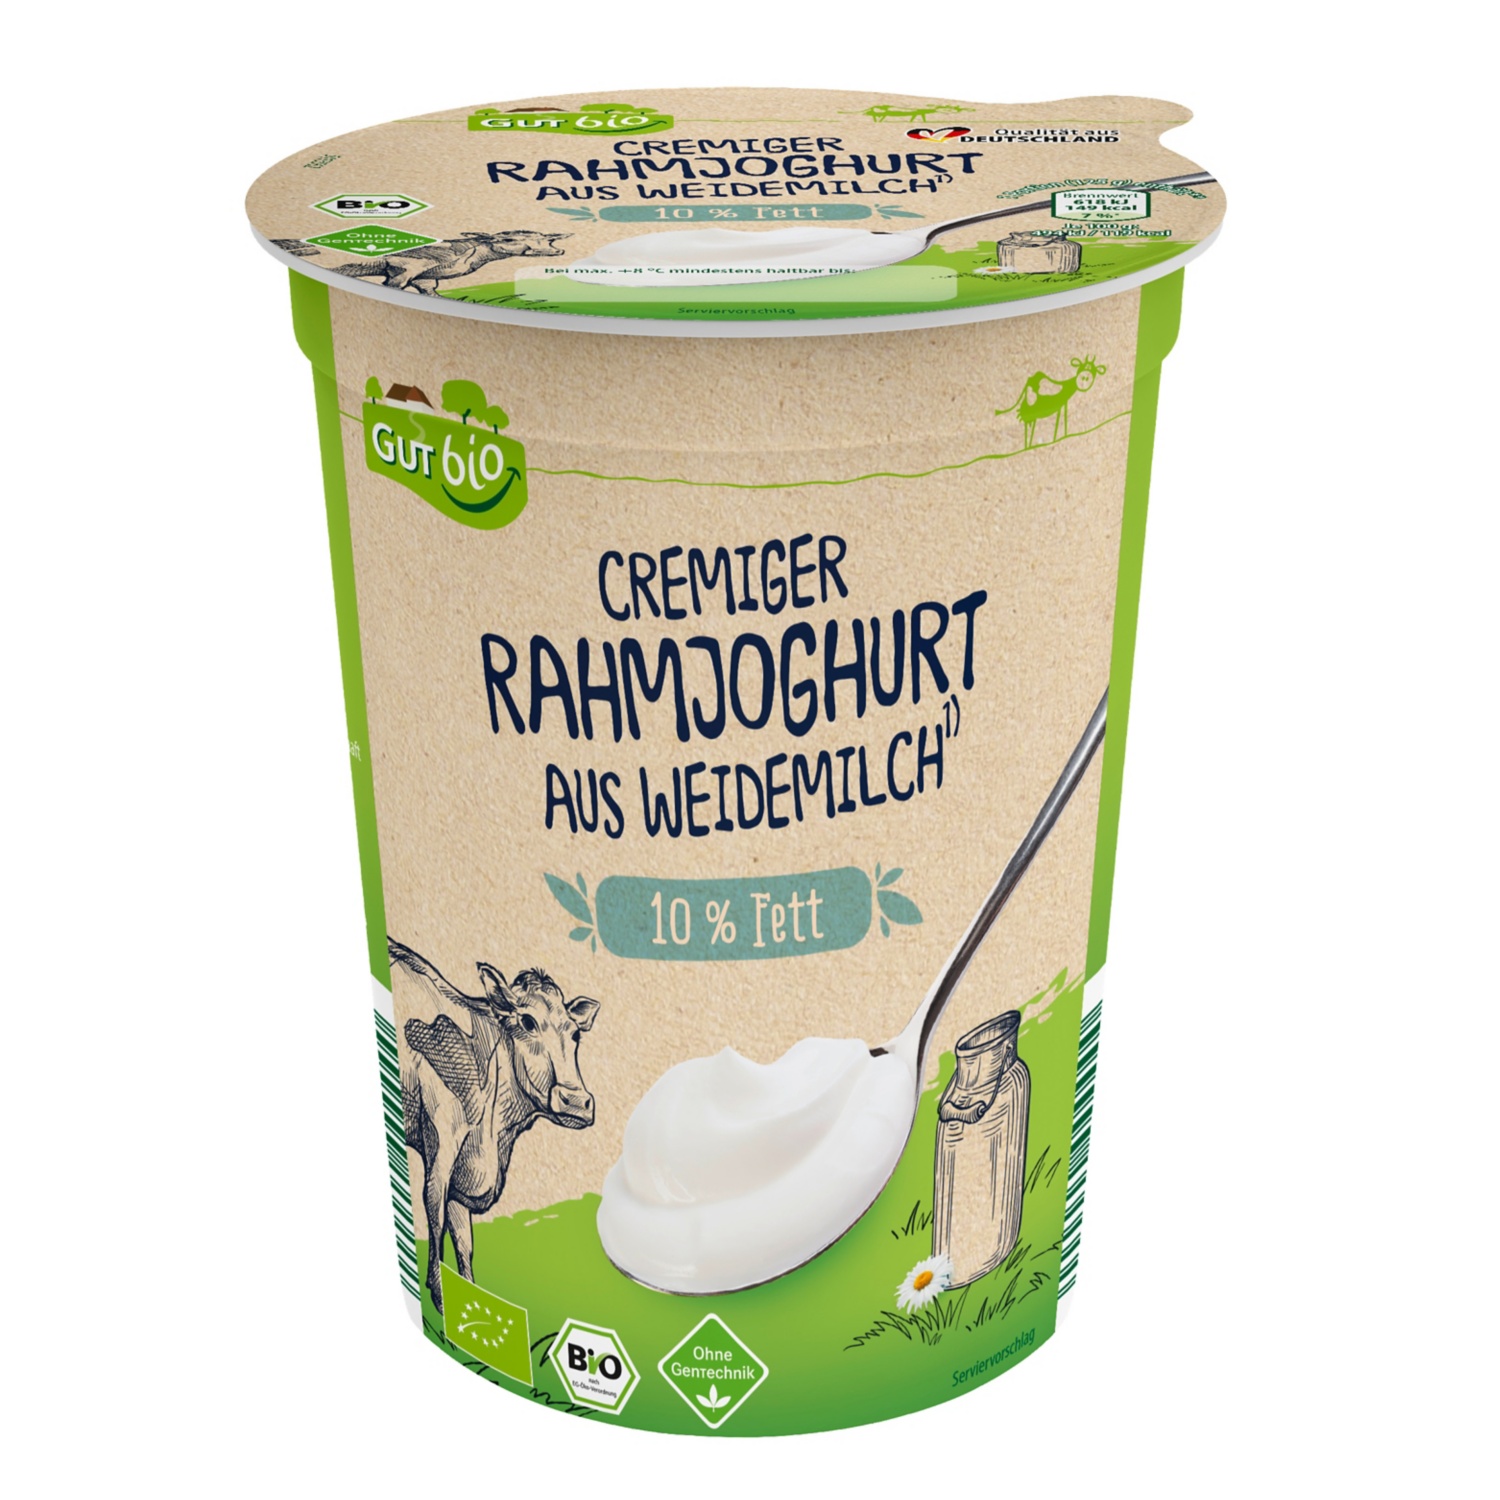 GUT BIO Bio-Cremiger-Rahmjoghurt 0,5 kg